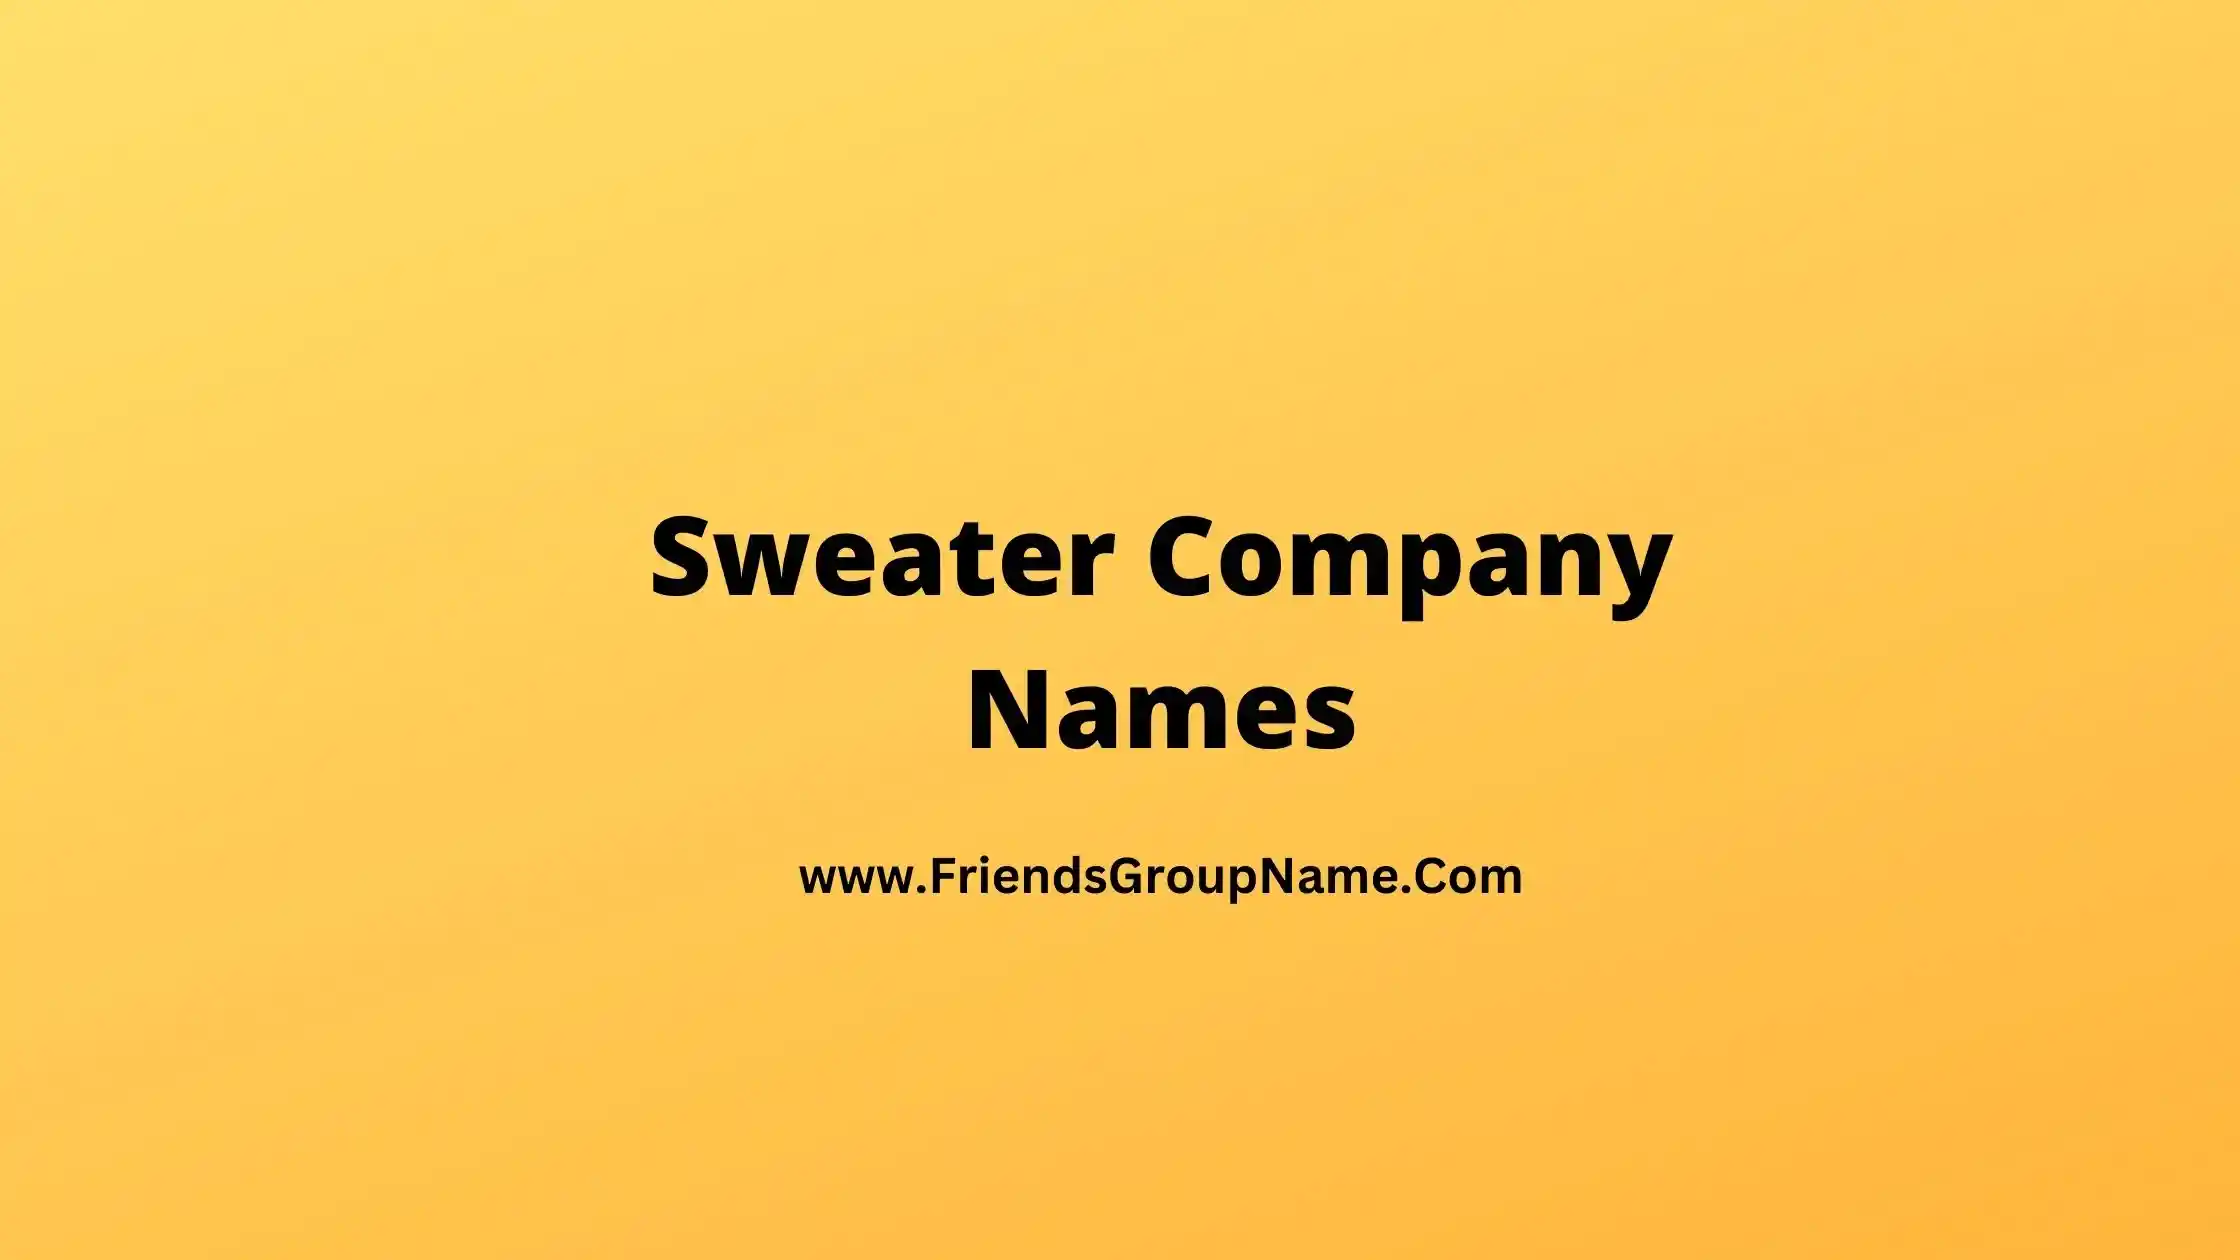 Sweater Company Names